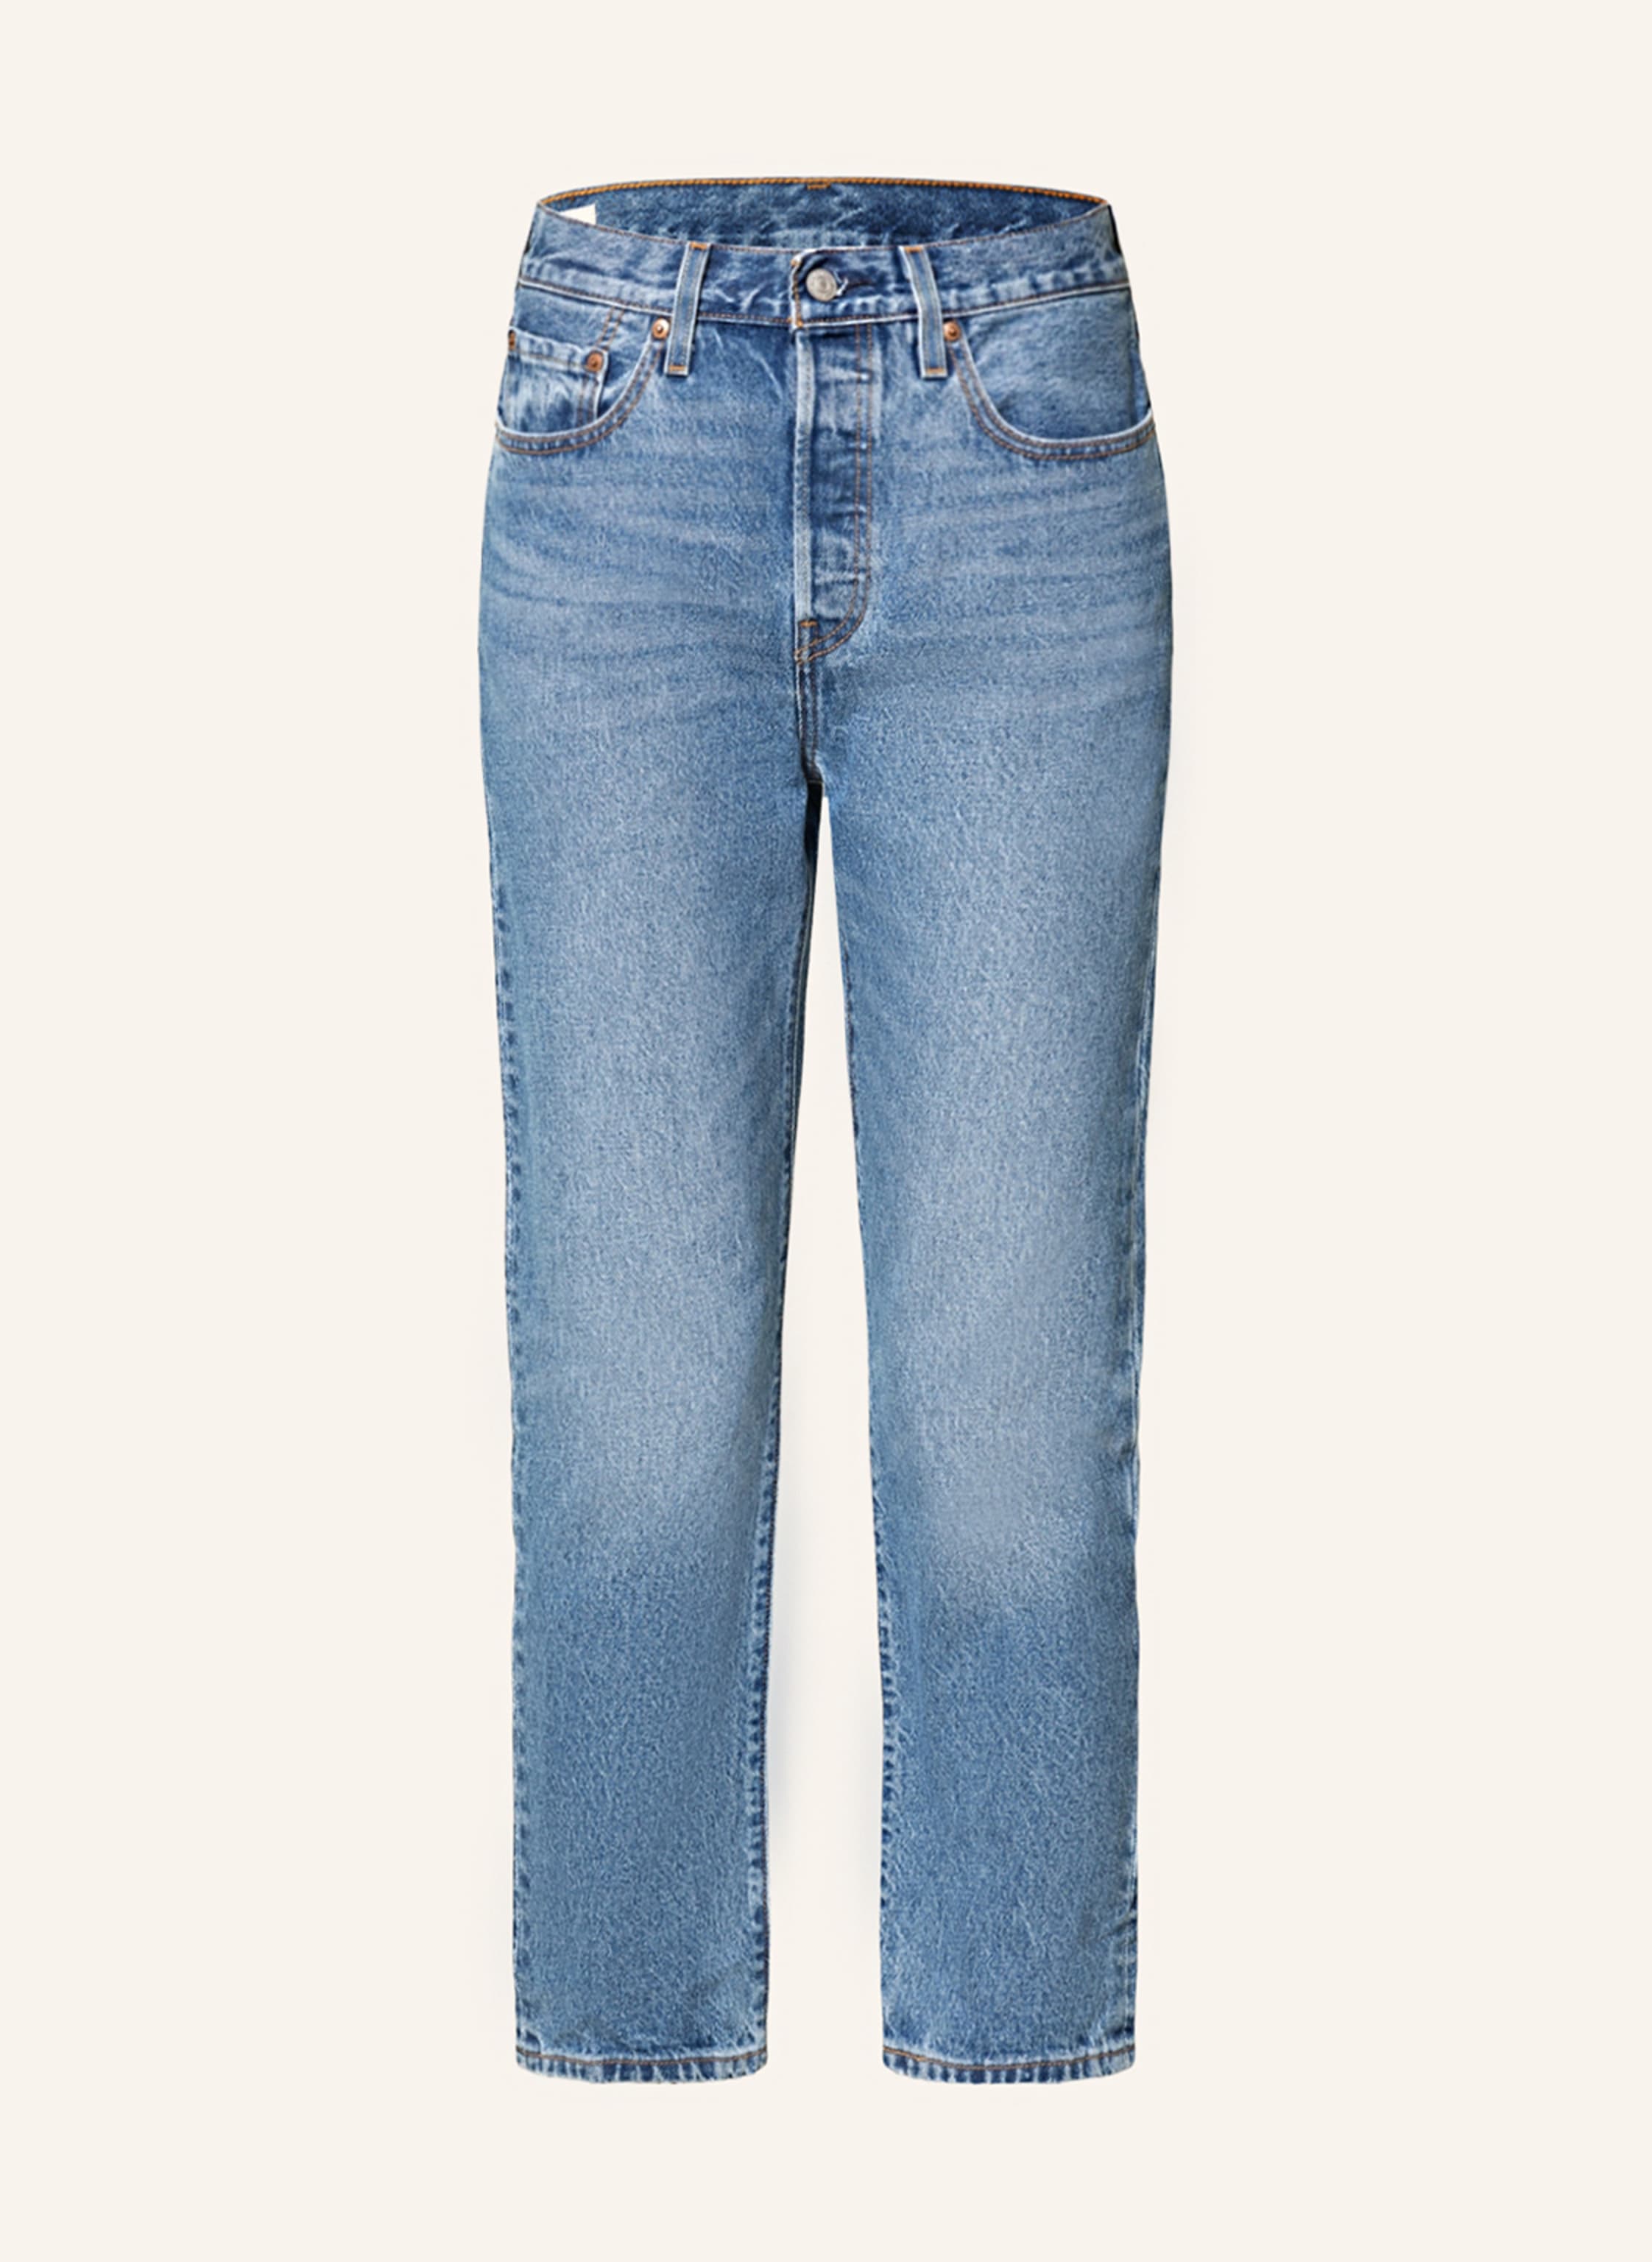 Levi's® Straight jeans 501 ORIGINAL CROPPED in 36 med indigo - worn in |  Breuninger